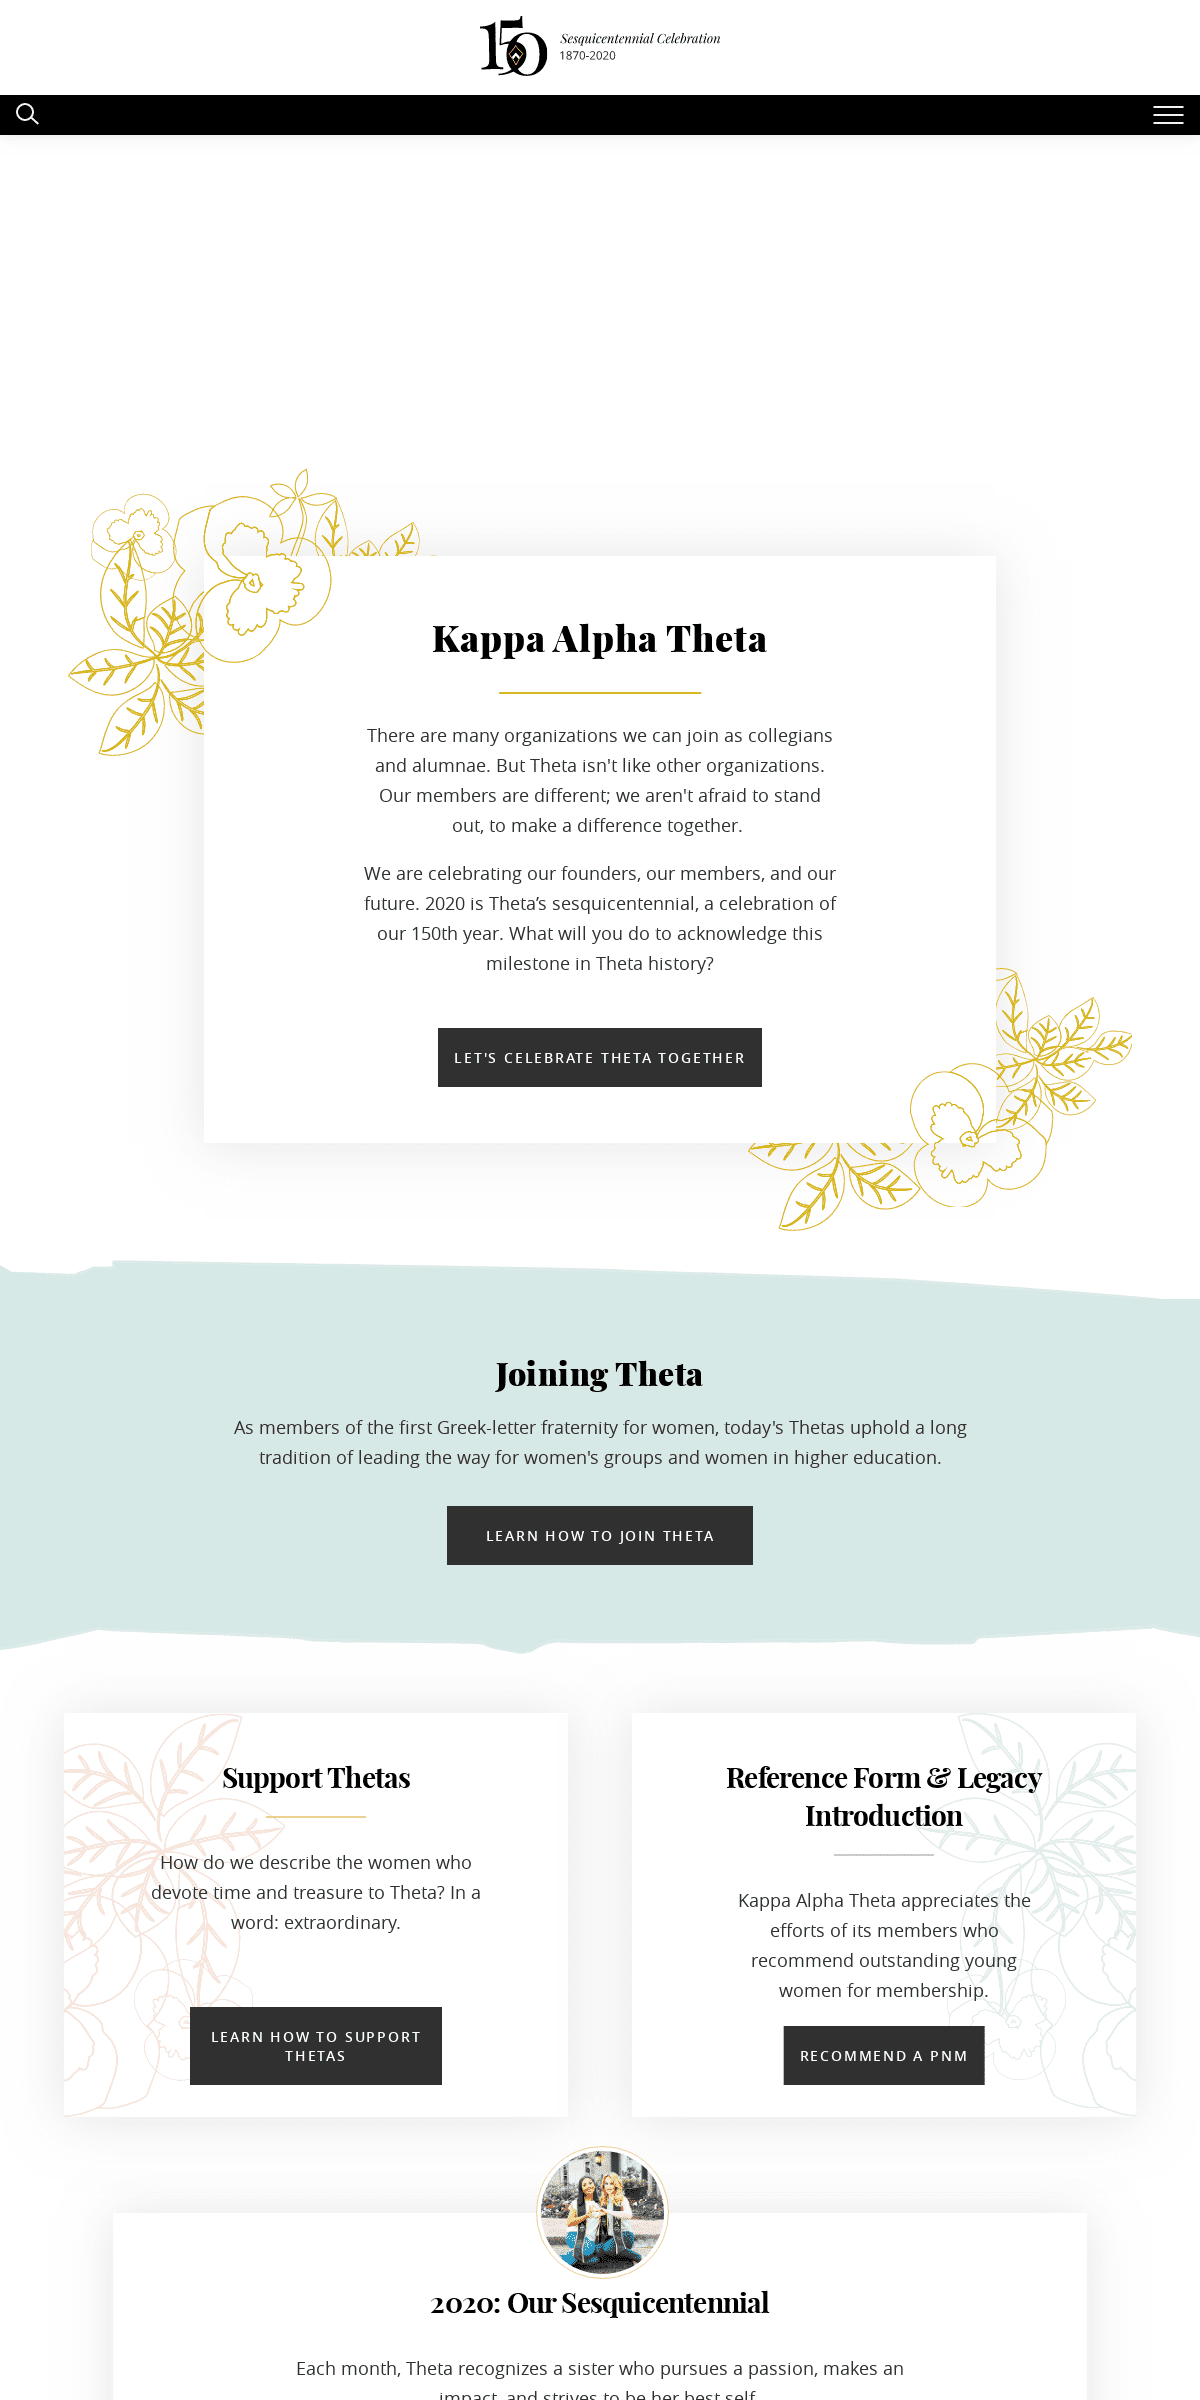 A complete backup of kappaalphatheta.org